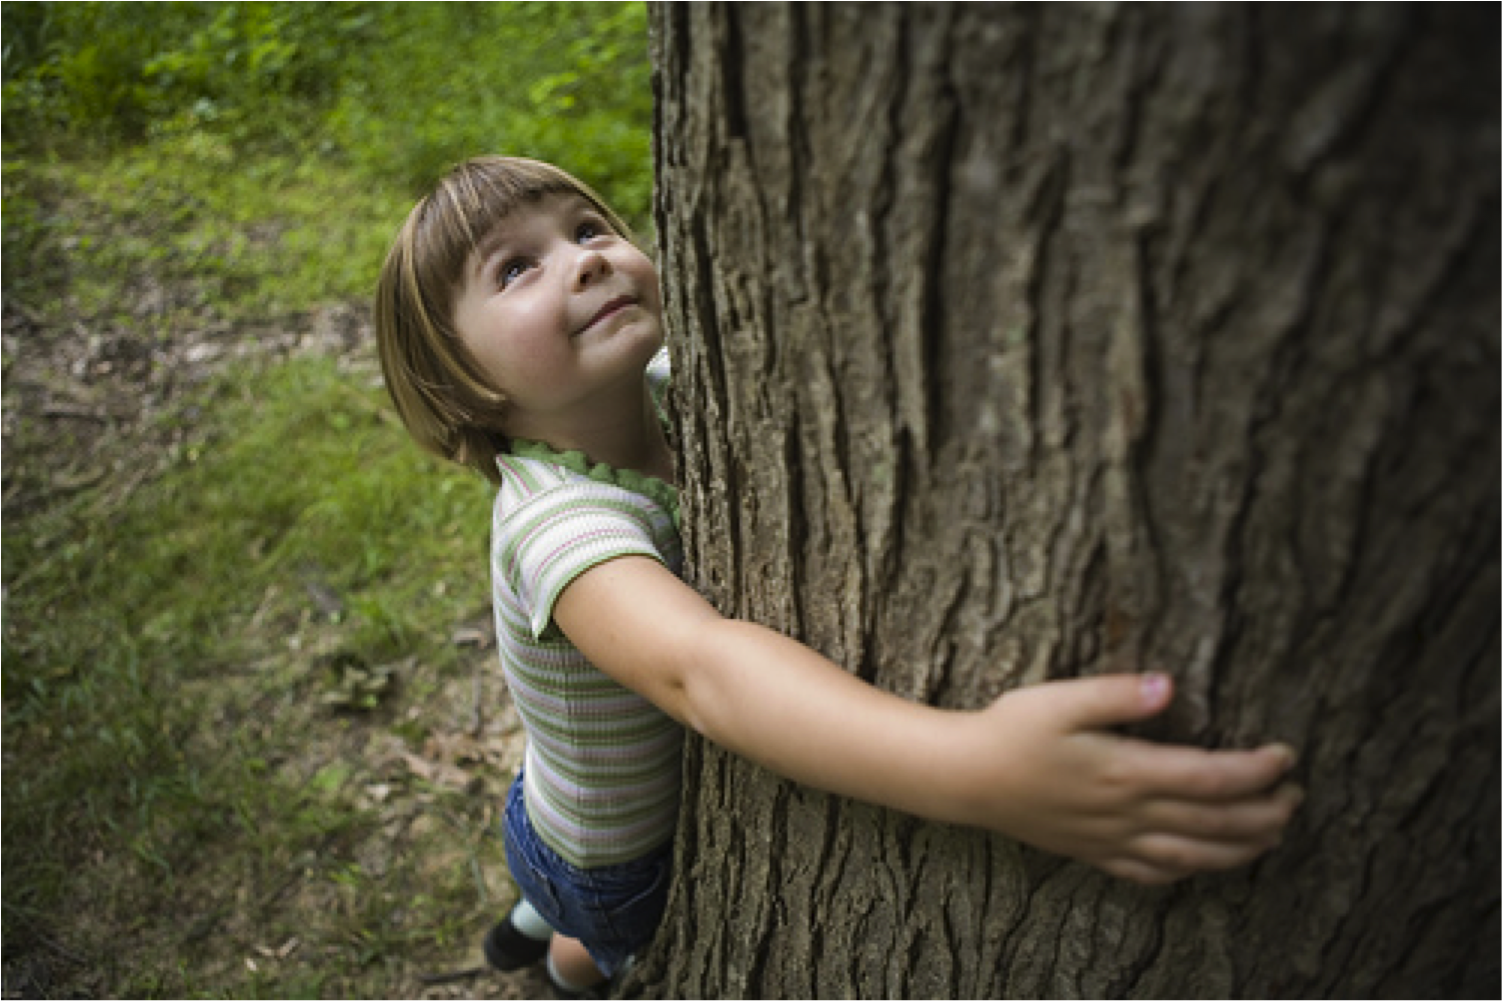 Дерево для детей. Дети и природа. Природа деревьев для детей. Любовь детей к природе. Be close to nature